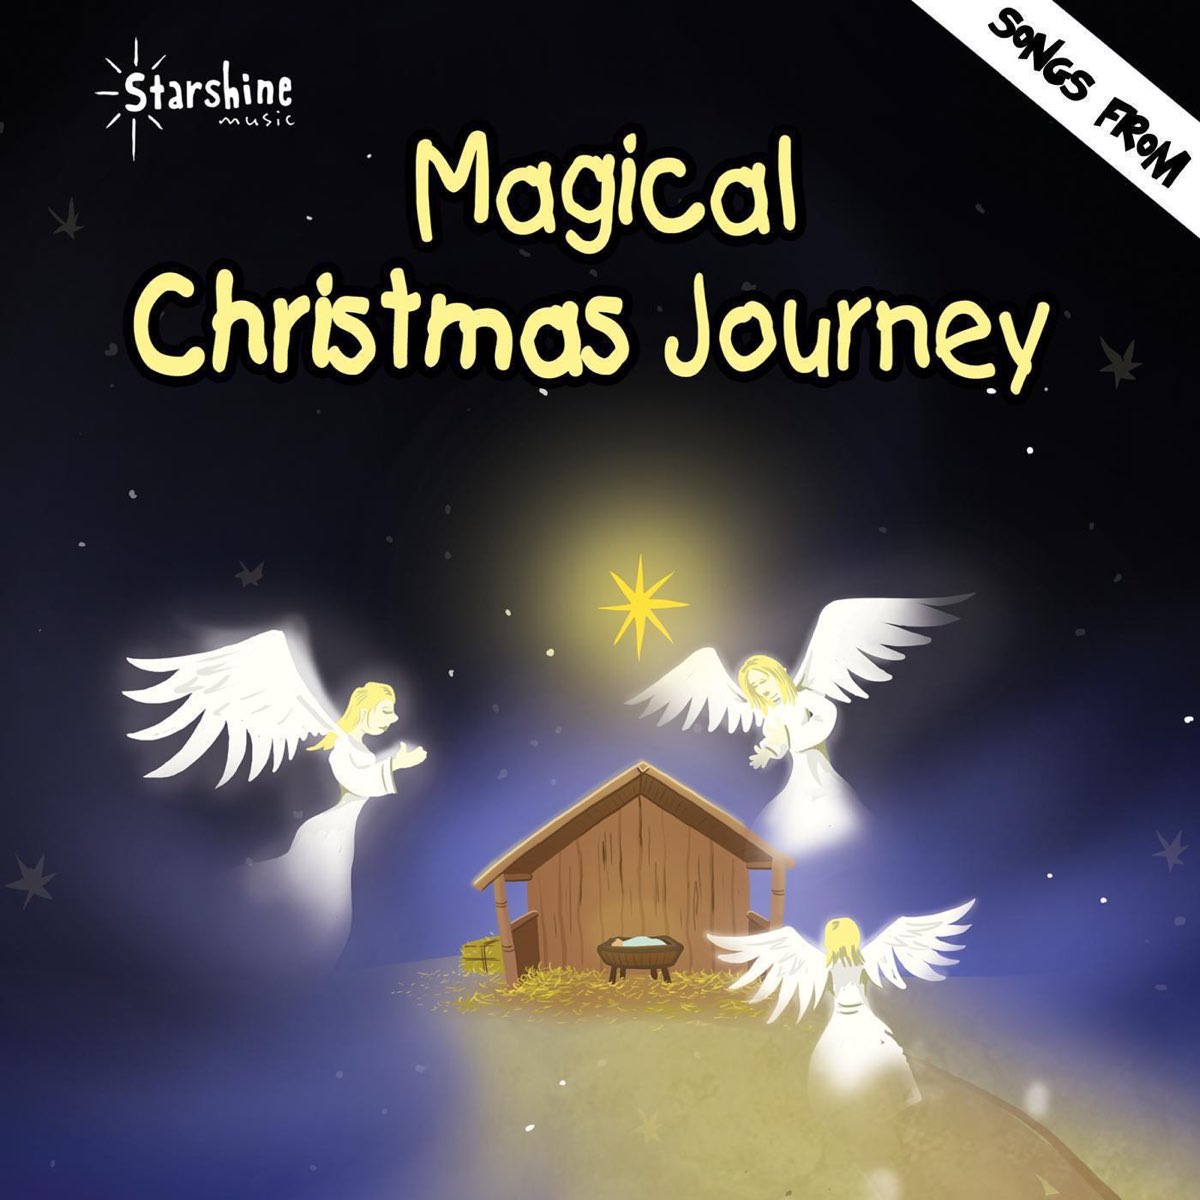 magical christmas journey song lyrics